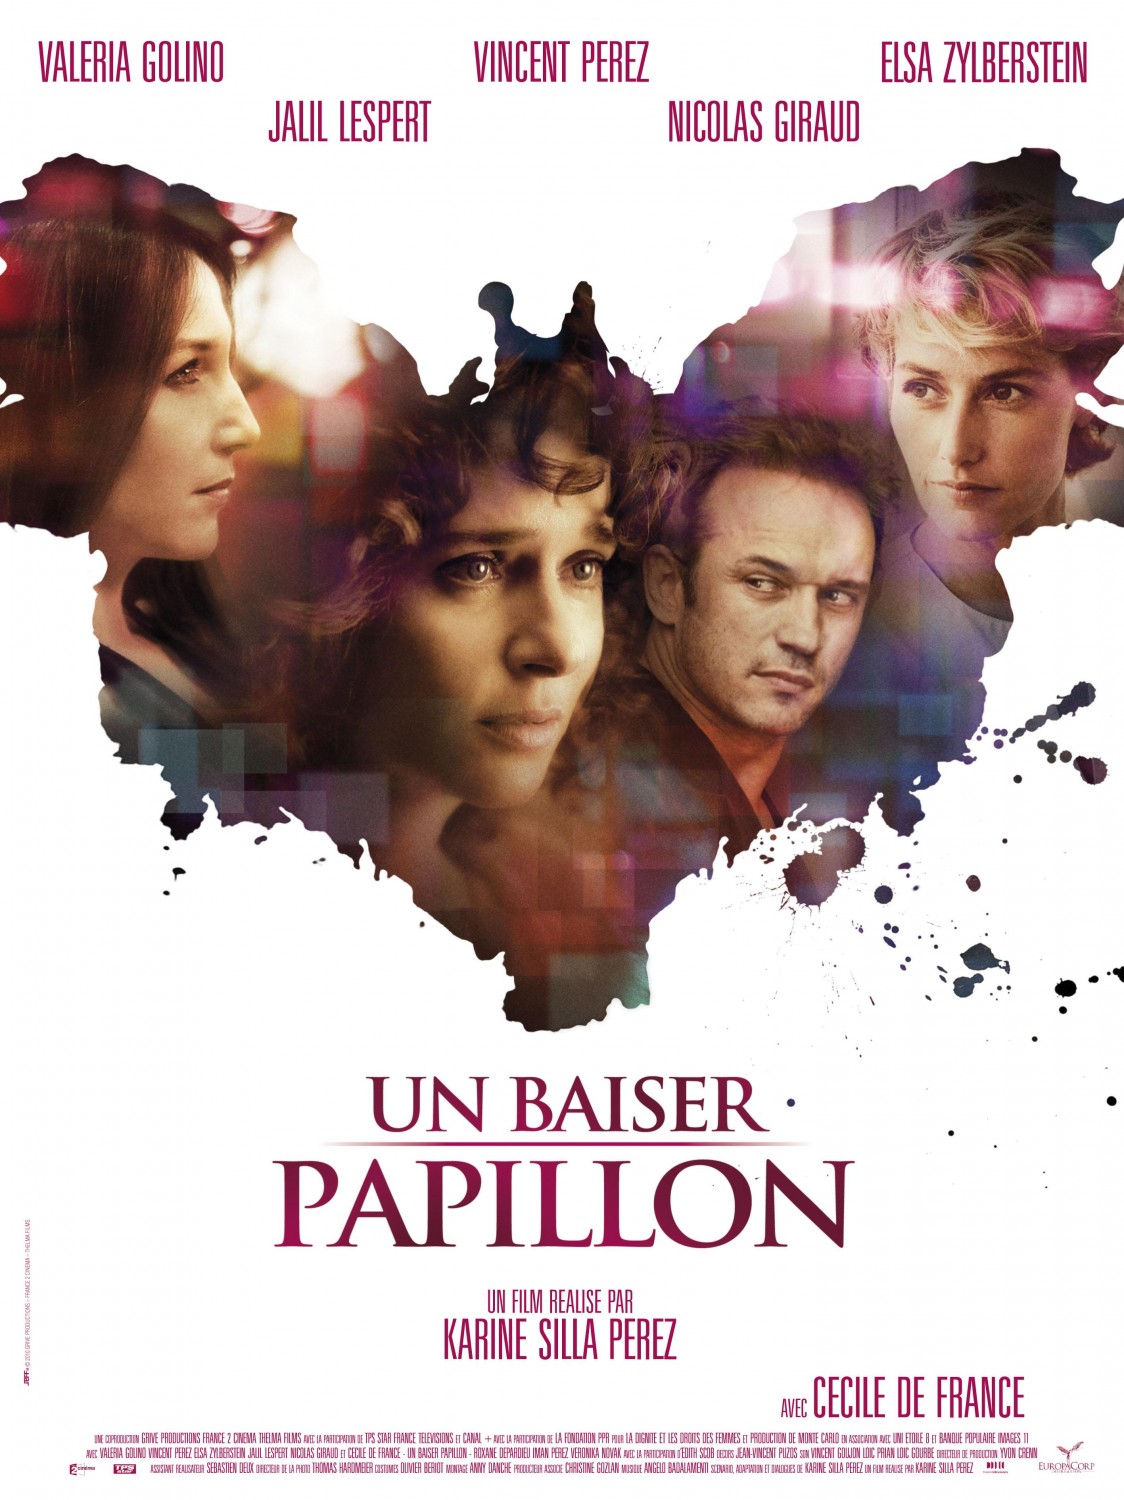 Extra Large Movie Poster Image for Un baiser papillon 